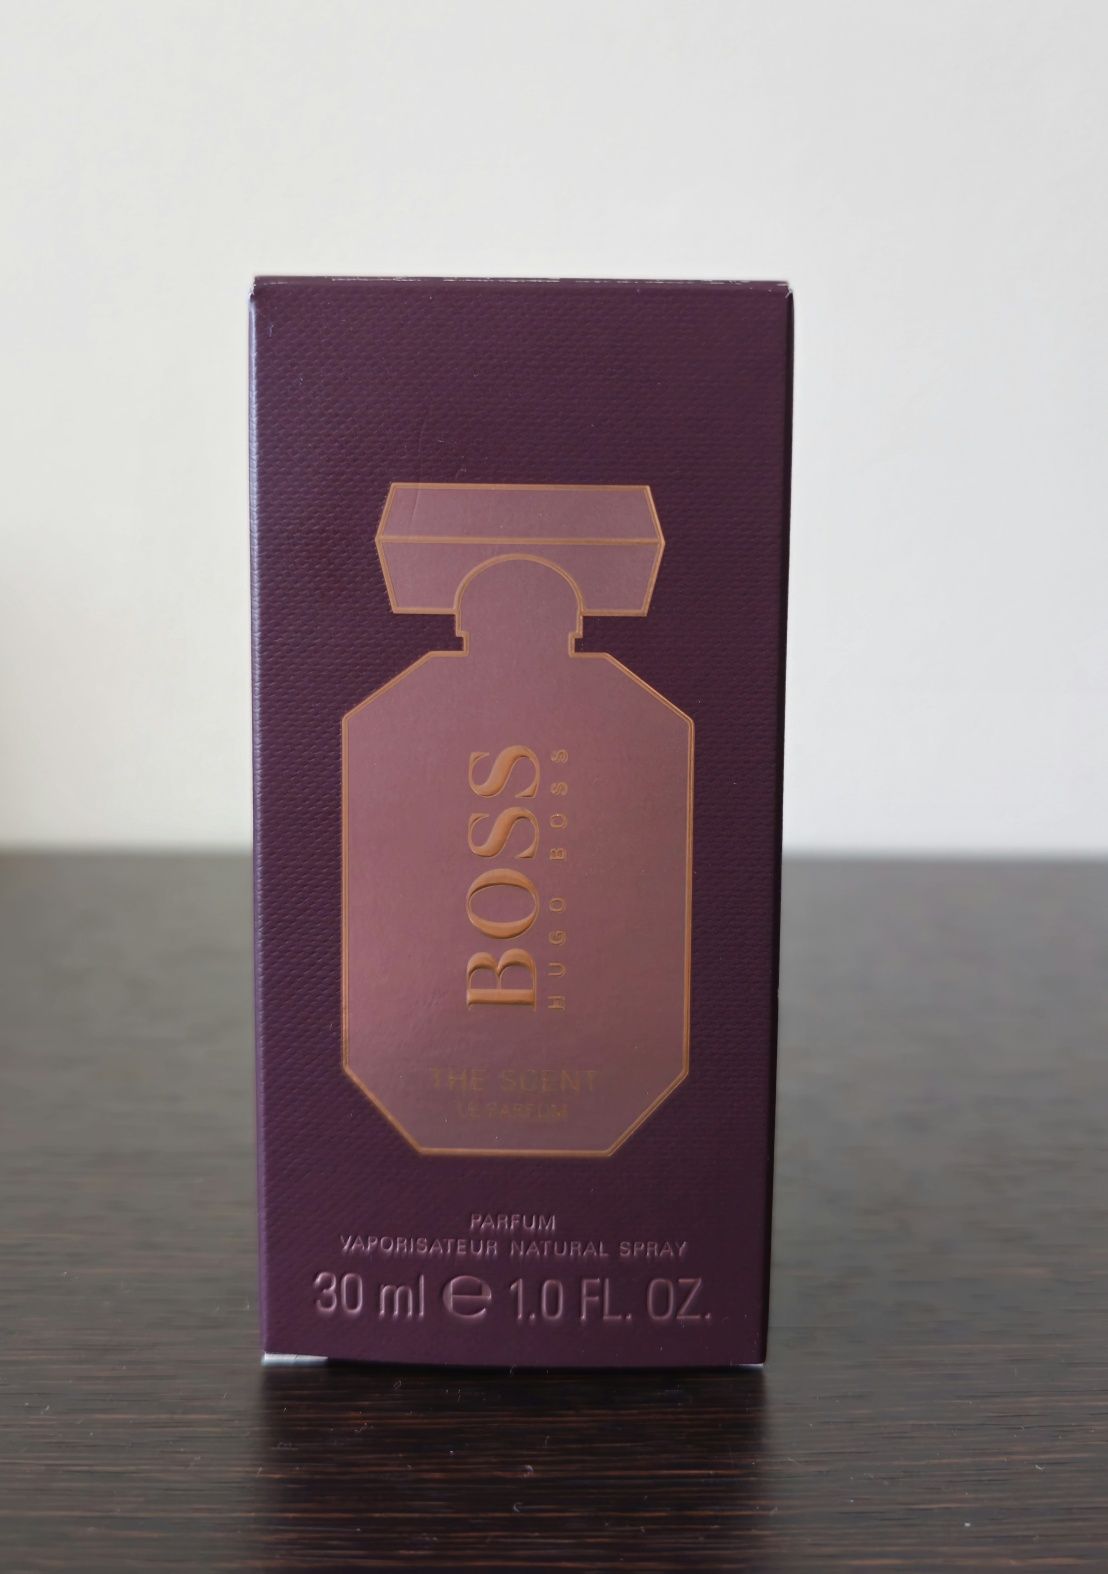 Hugo Boss – The scent le parfum